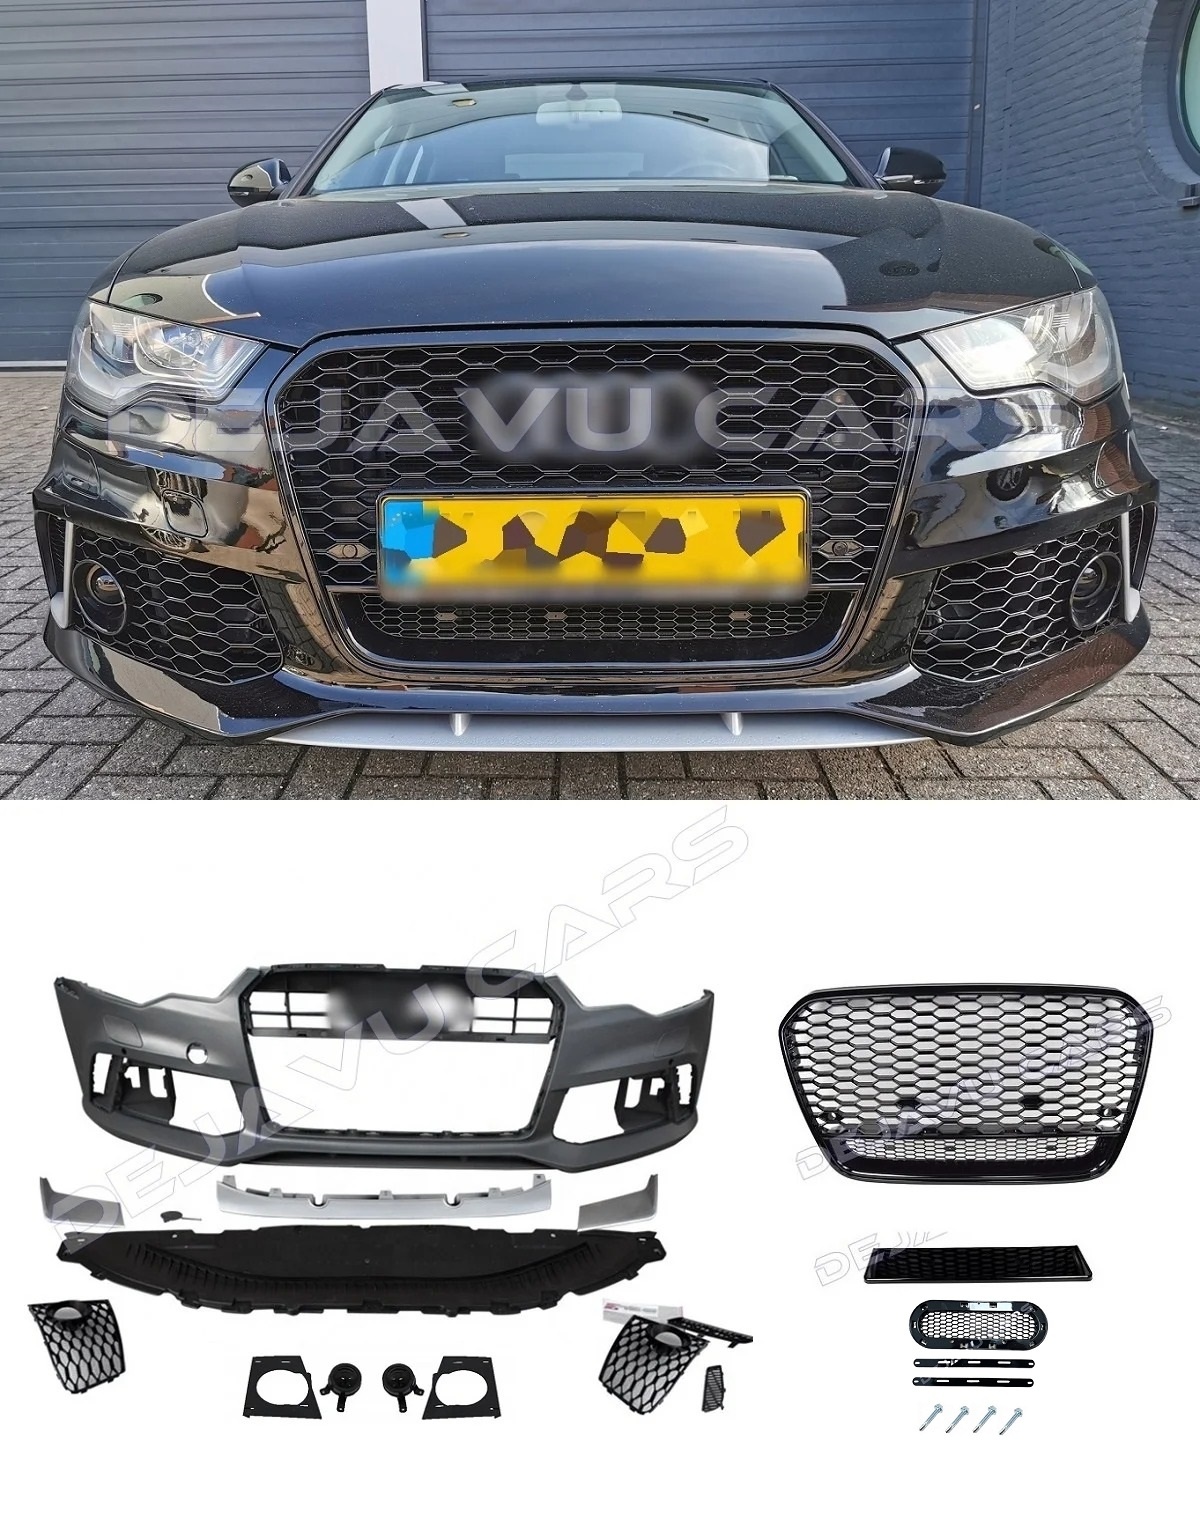 Custom Audi Tuning: Full RS6 Style Body Kit (Fits A6 Avant)